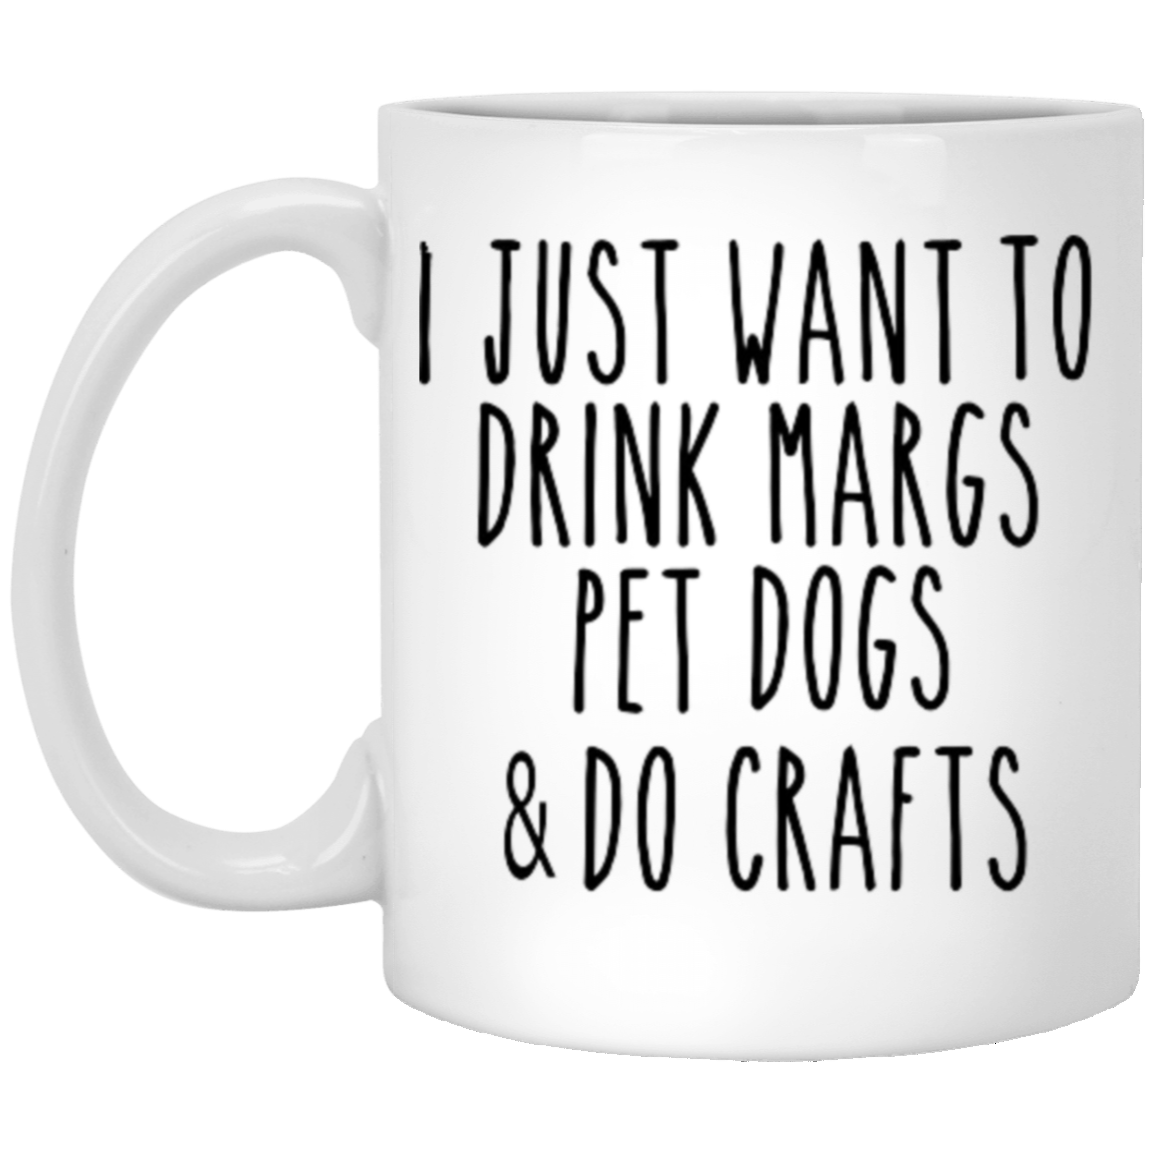 Drink Margs Mug